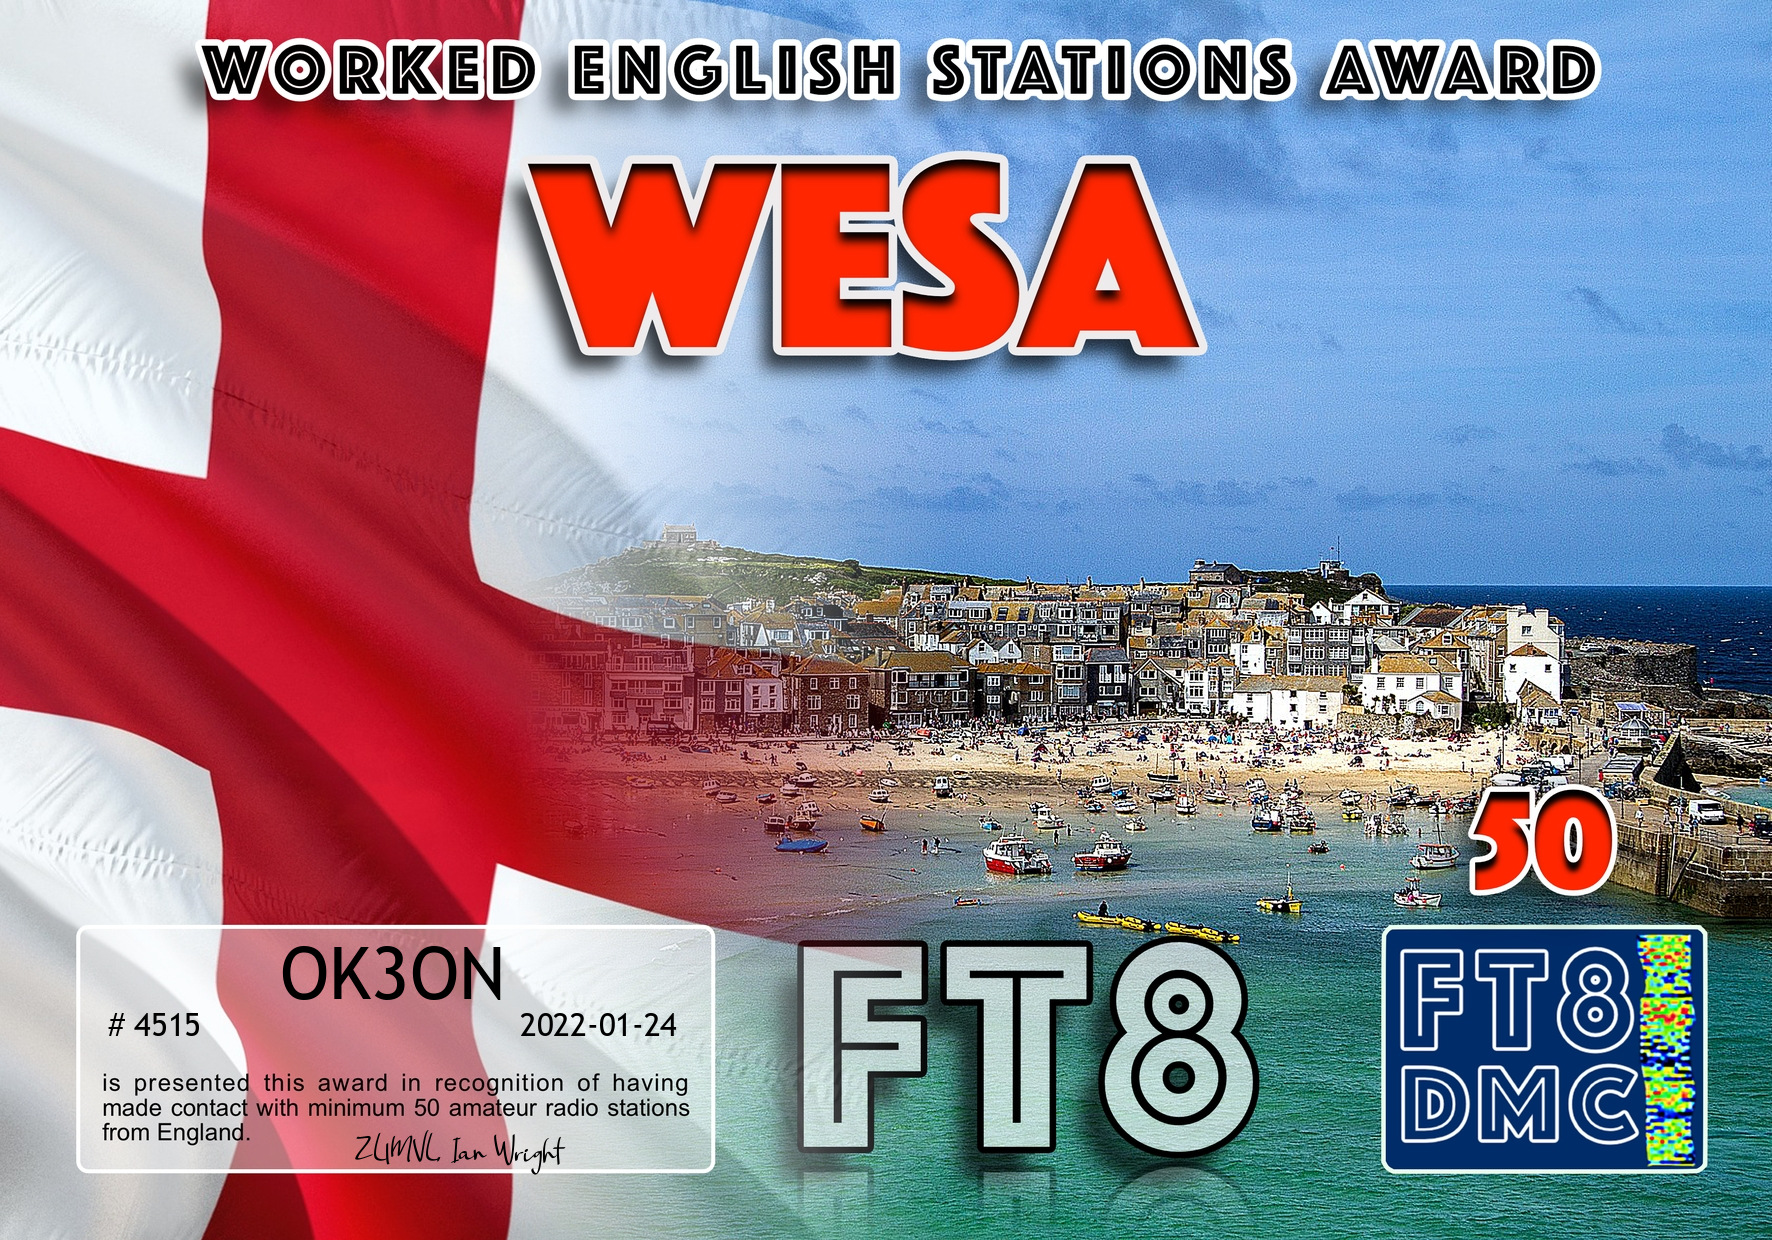 awards/OK3ON-WESA-I_FT8DMC.jpg